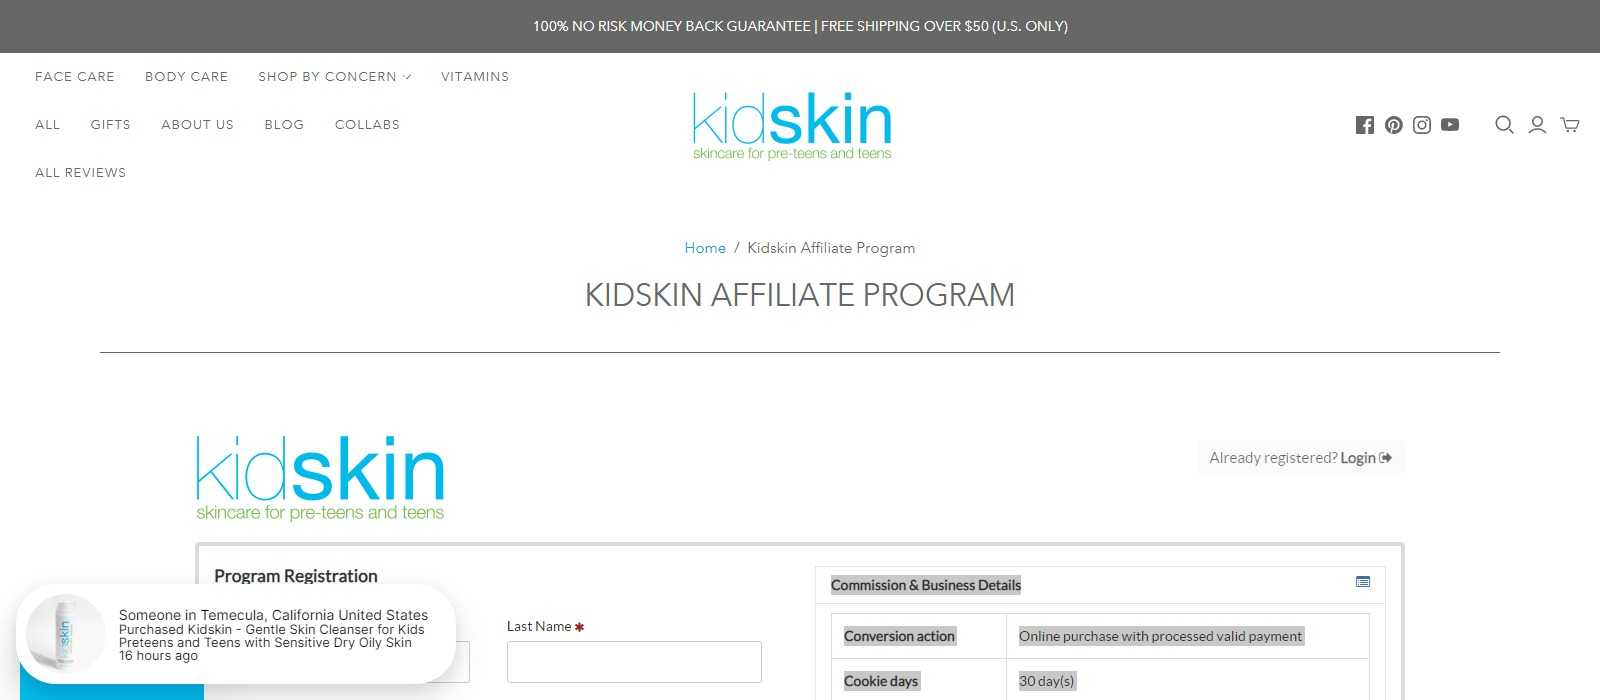 Kidskin Affiliate Program Review: Get Earn 15% commission on each sale